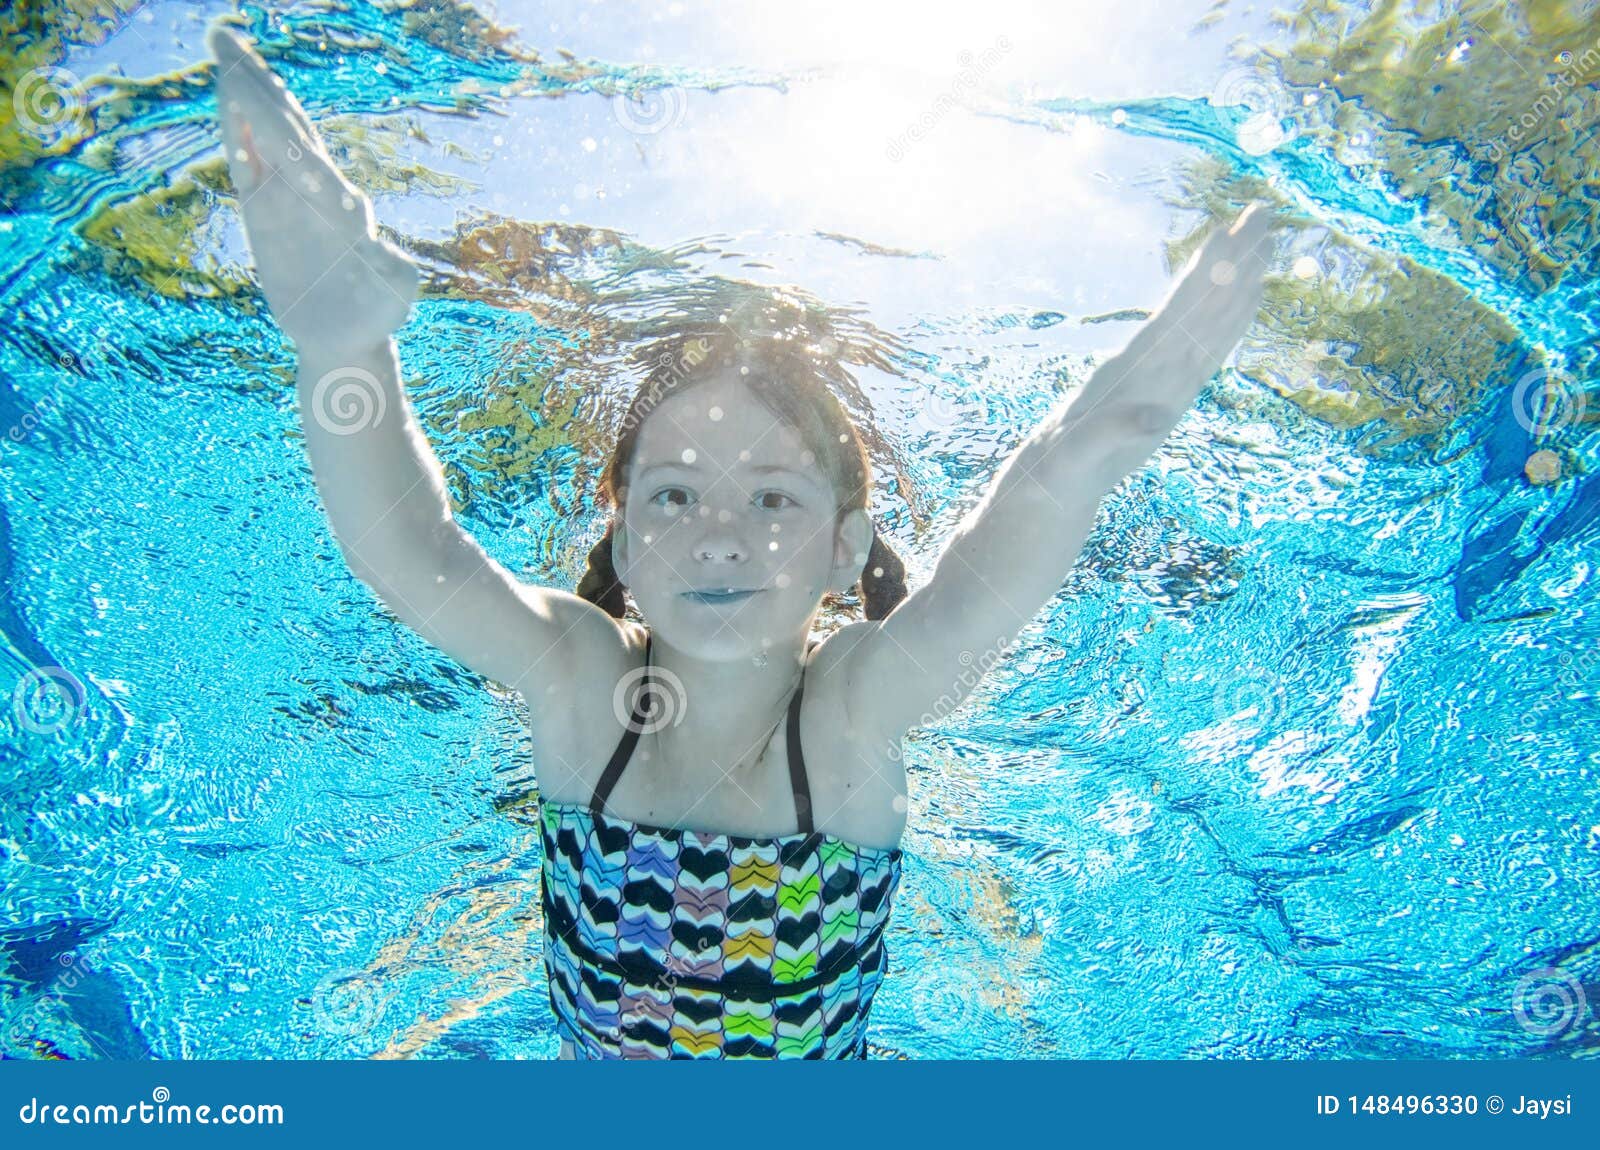 Child Swims Underwater In Swimming Pool, Happy Active 